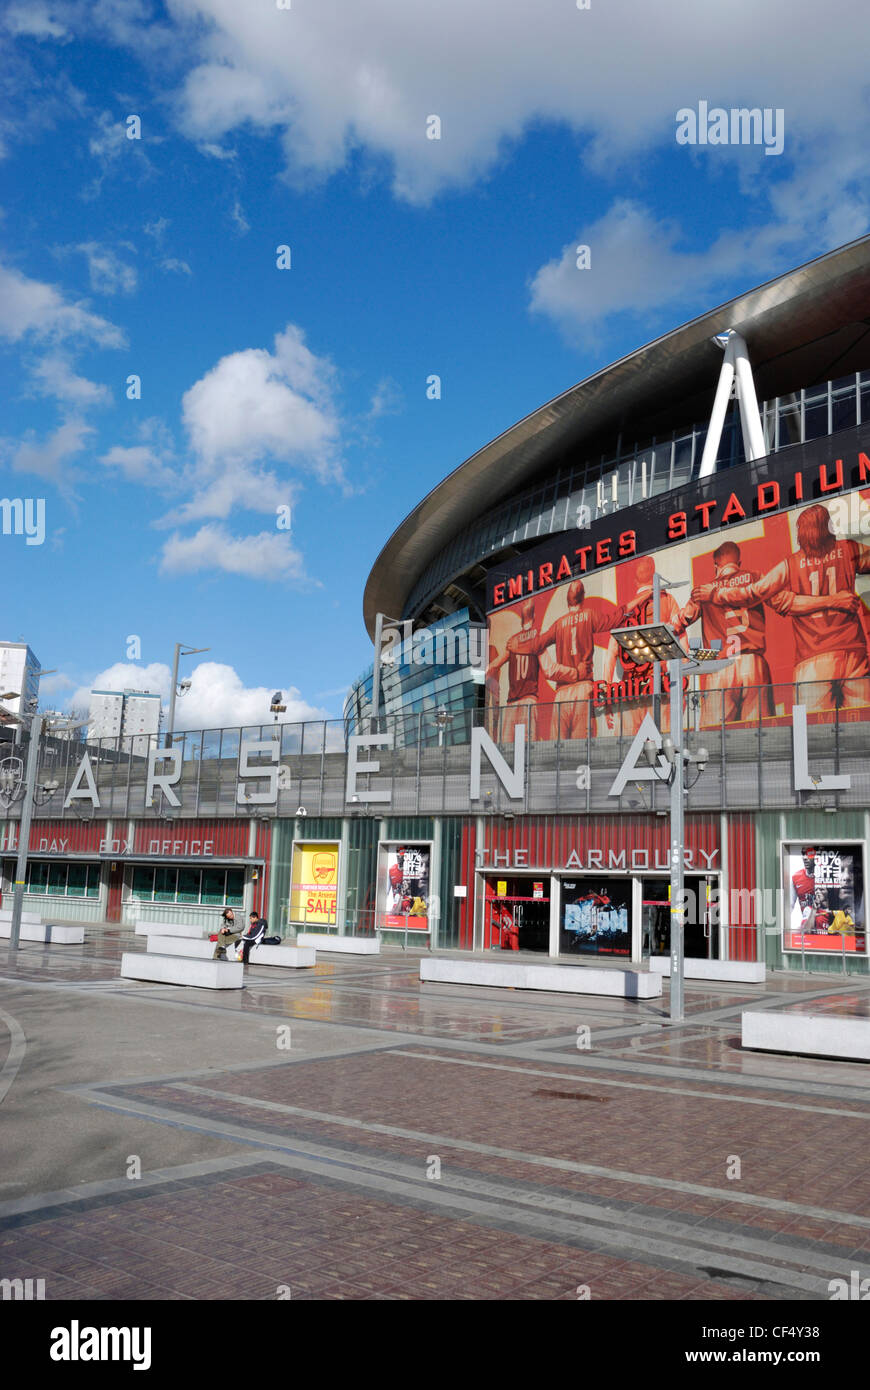 The exterior of the Emirates Stadium, home to Arsenal Football Club. Stock Photo